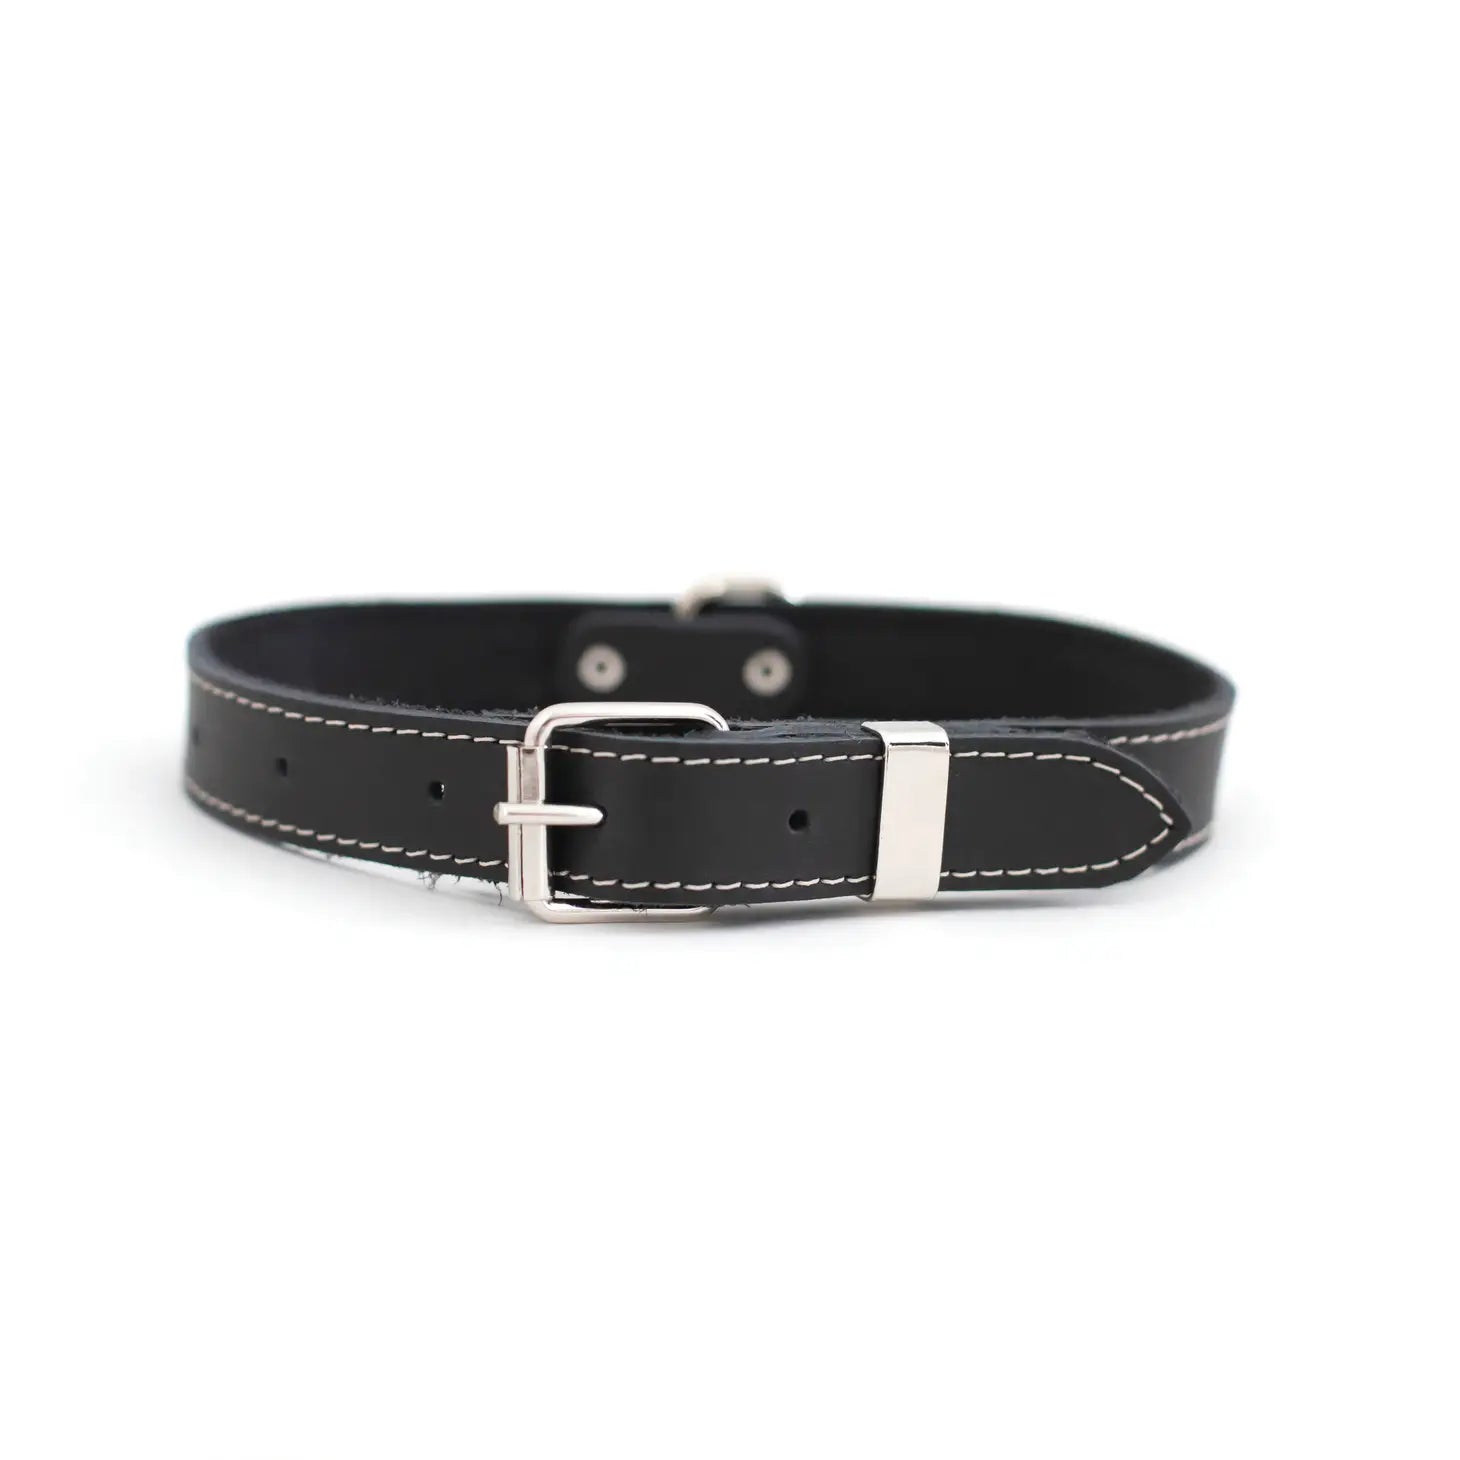 Euro-Dog Genuine Leather Dog Collars